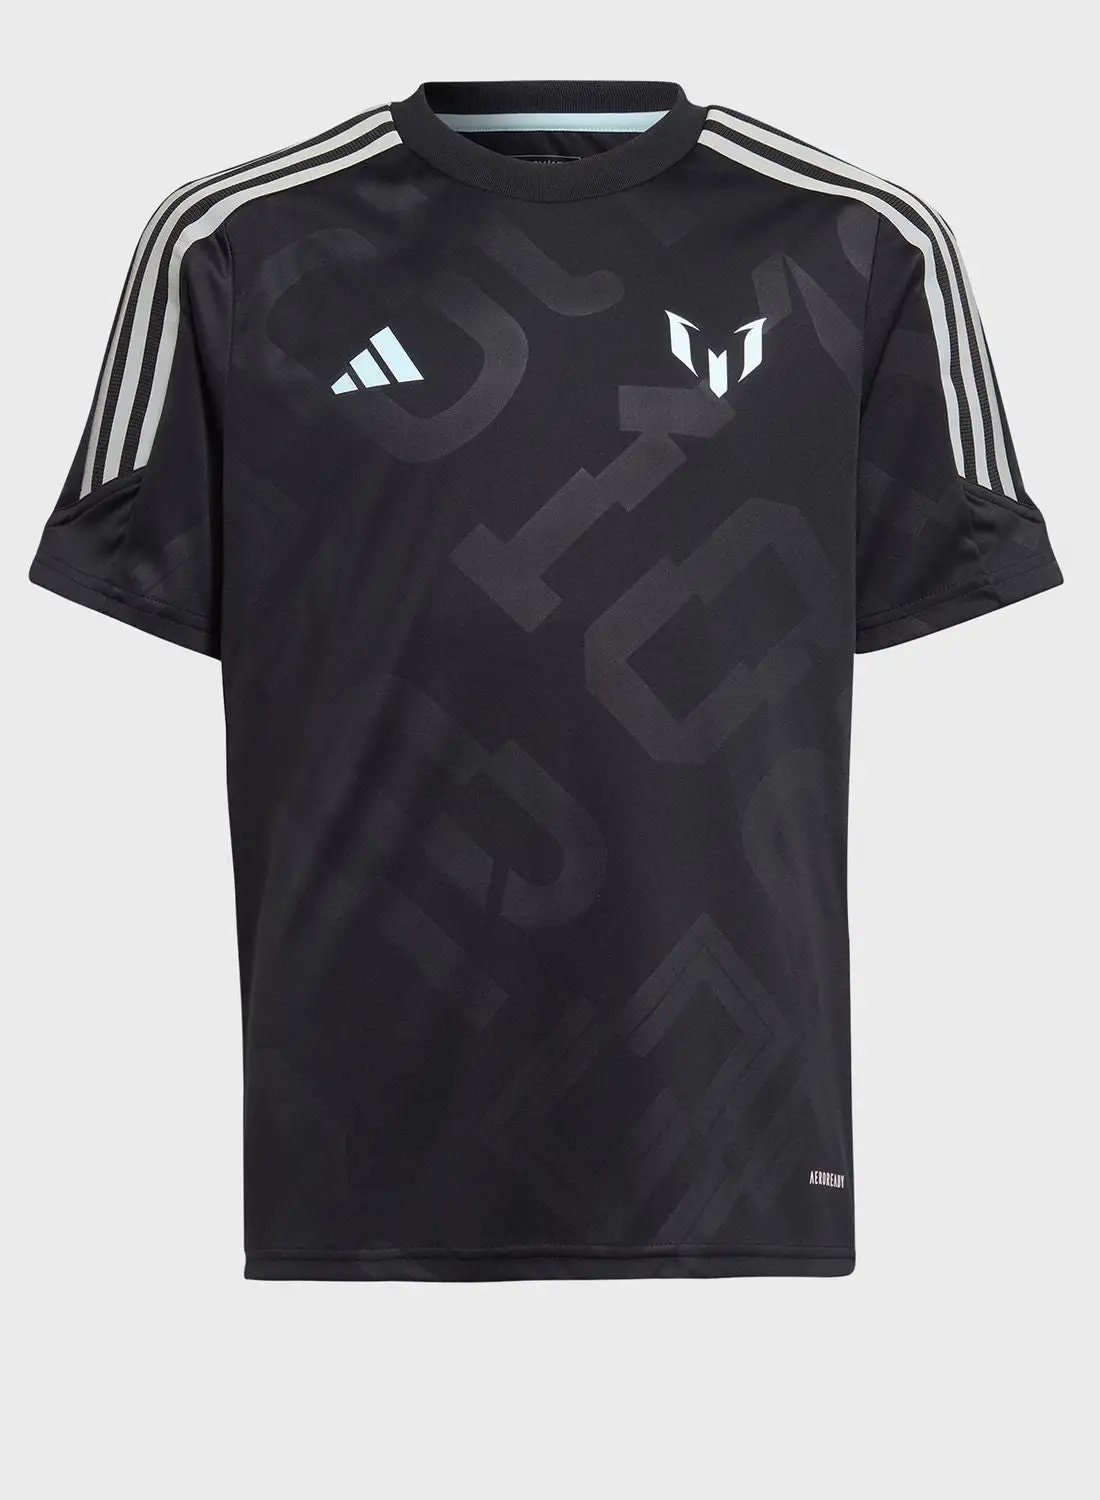 Adidas Messi Graphic T-Shirt Kids